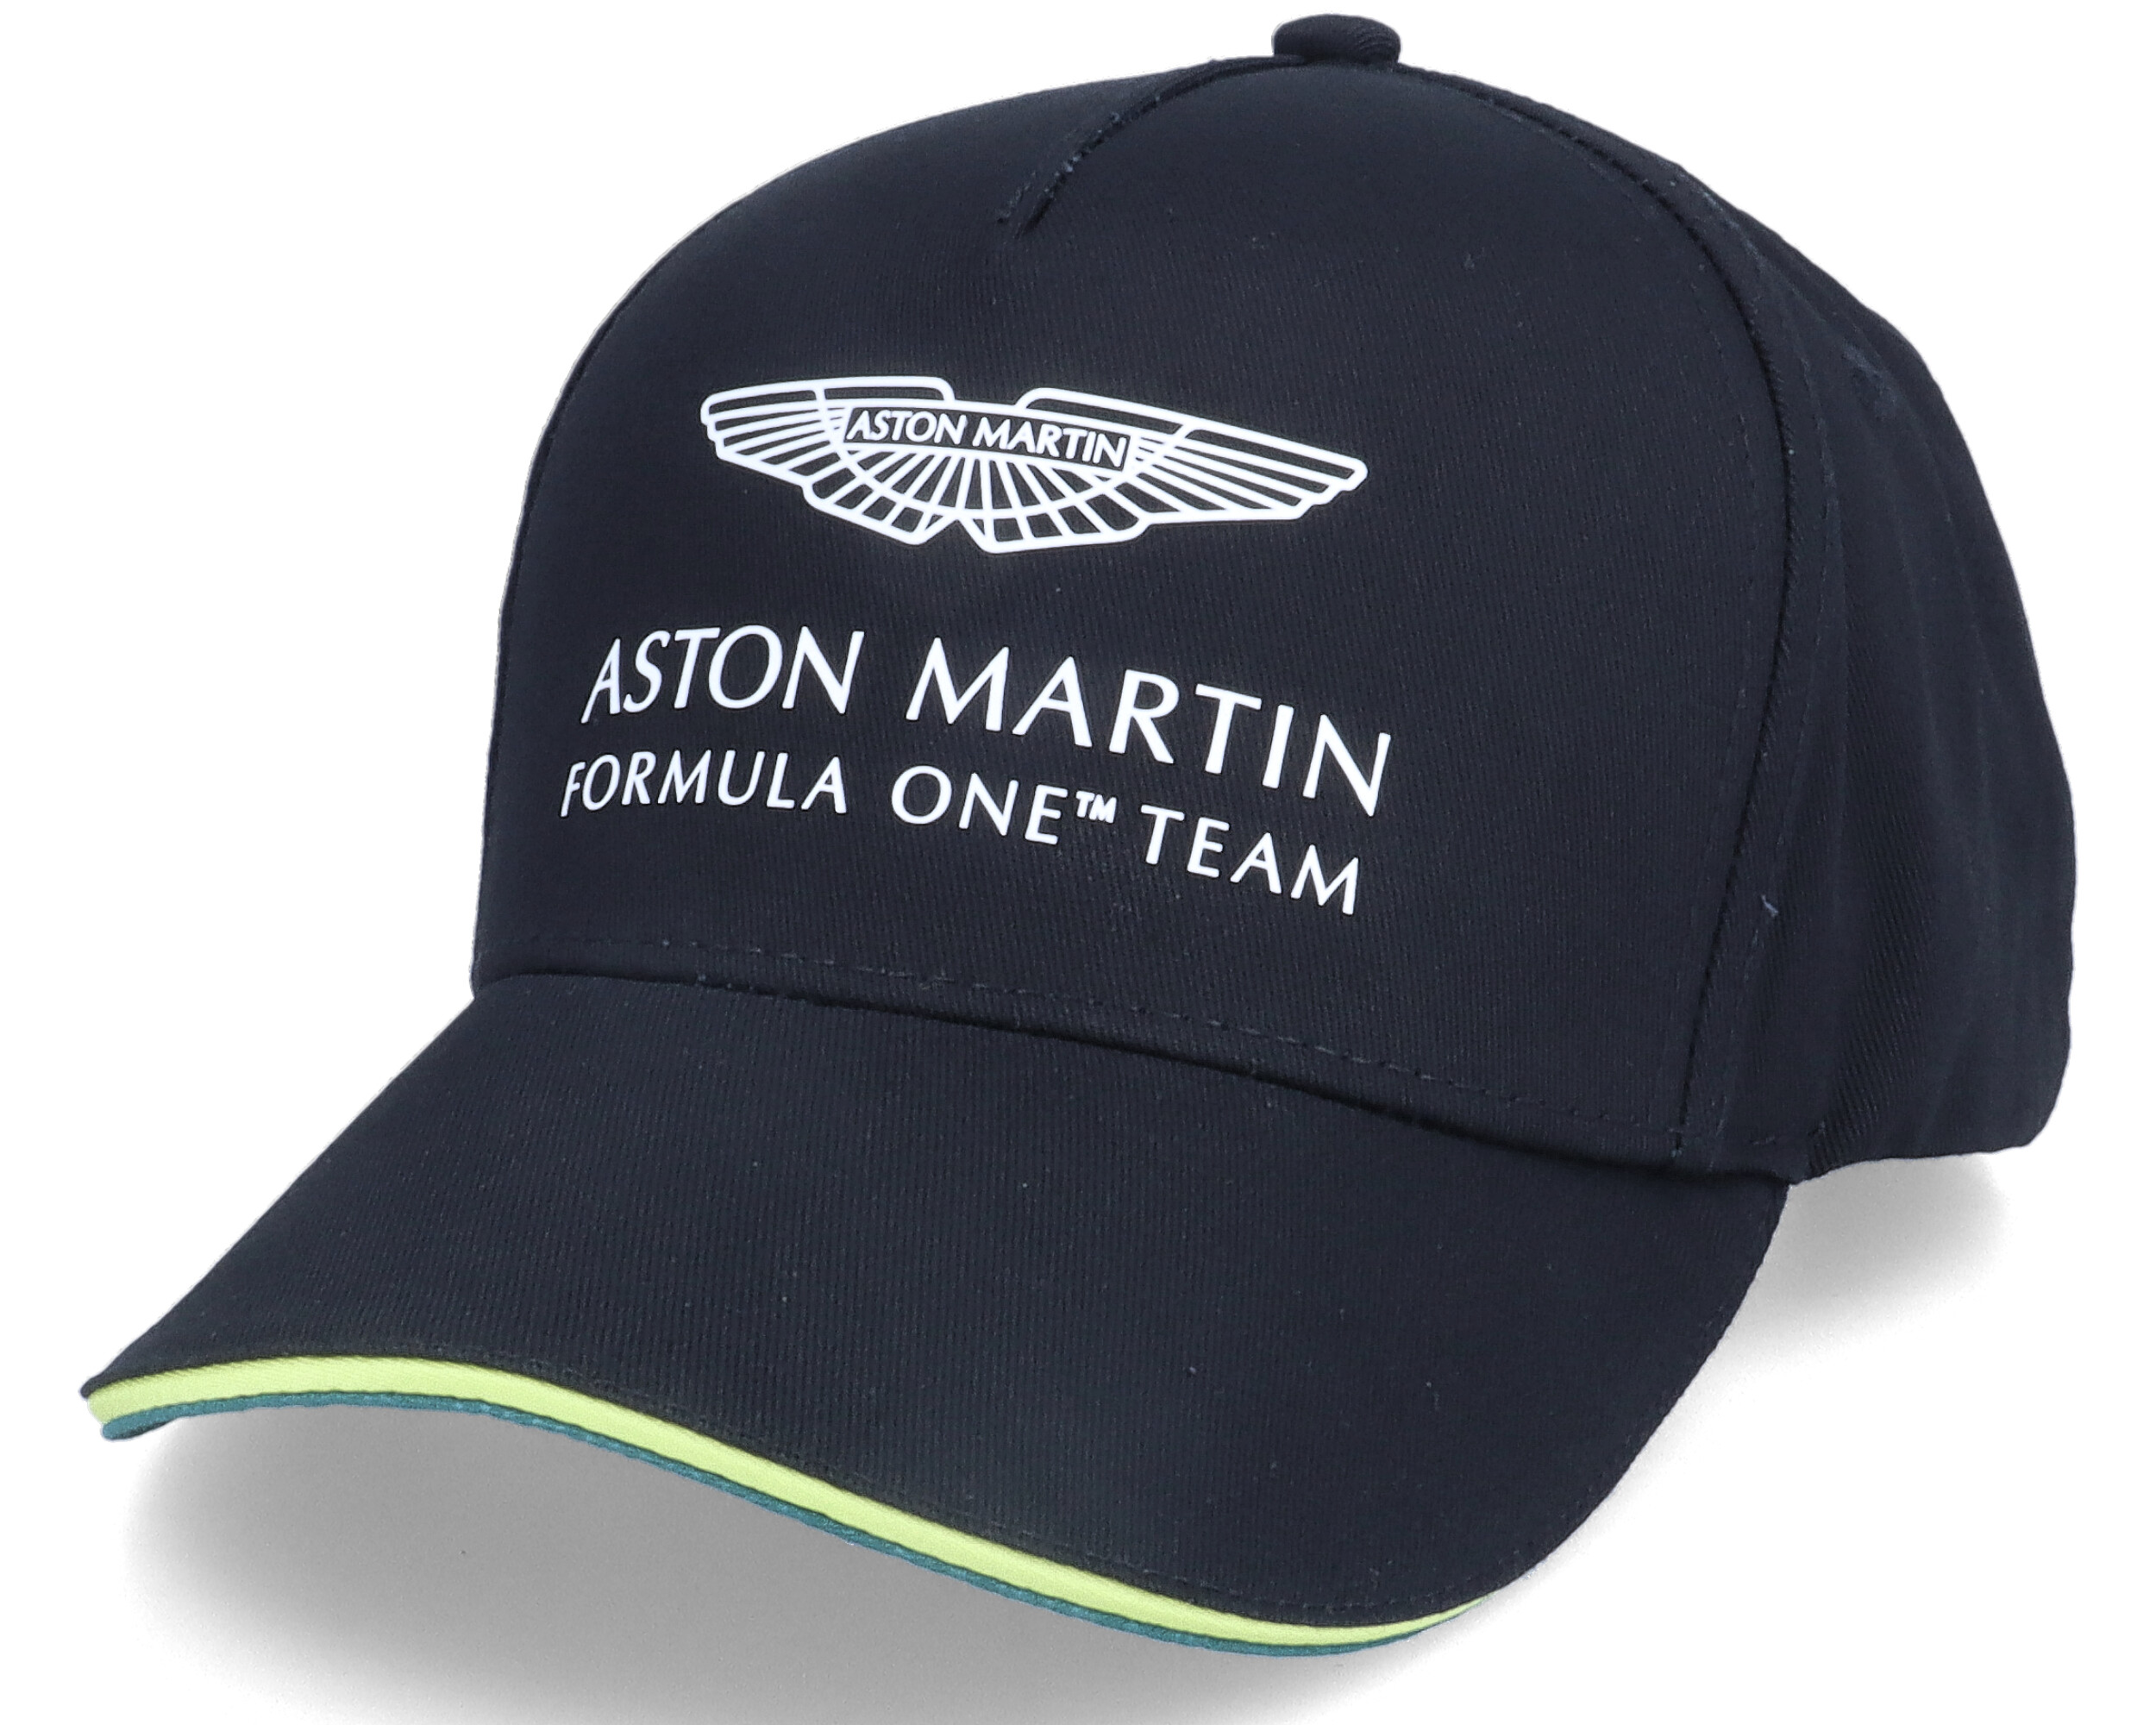 Кепка 1win. Бейсболка one Team. Купить кепку формула 1 оригинал Aston Martin.